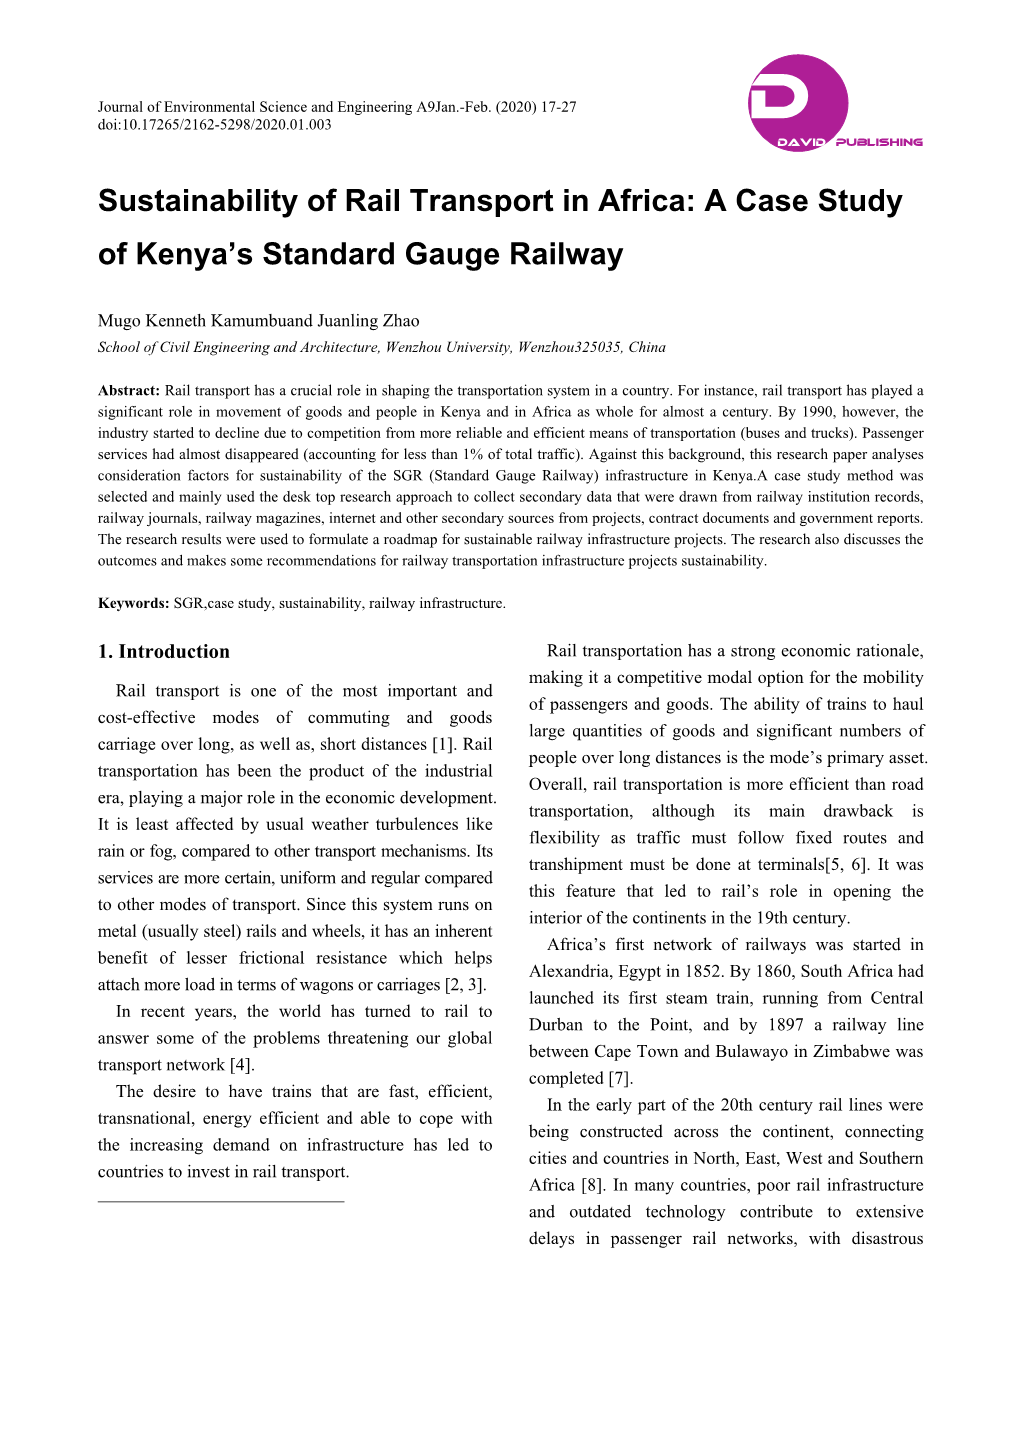 A Case Study of Kenya's Standard Gauge Railway